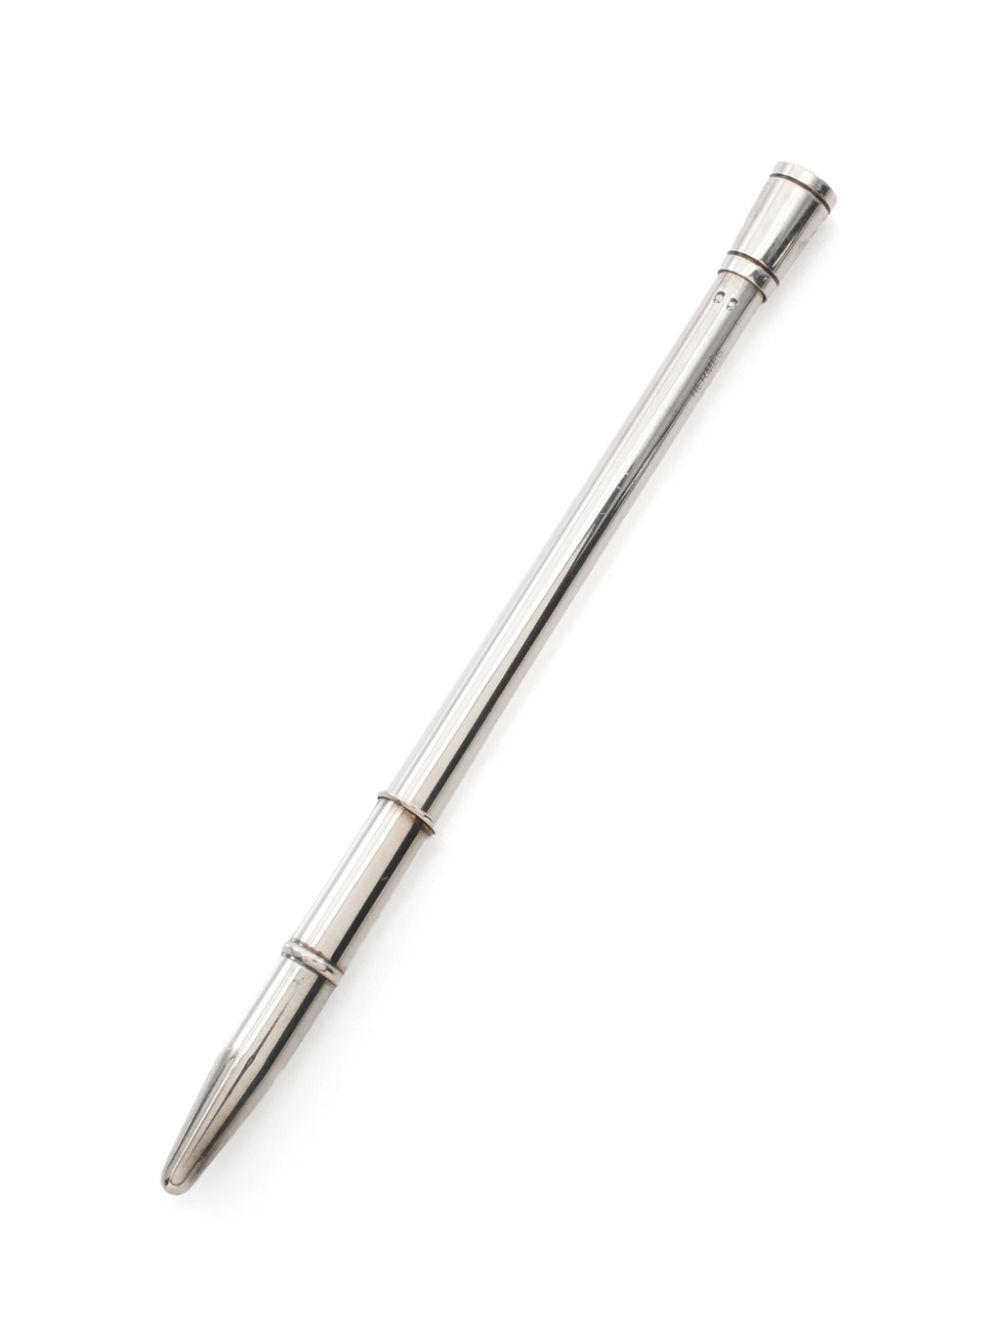 2000s sterling silver ballpoint pen